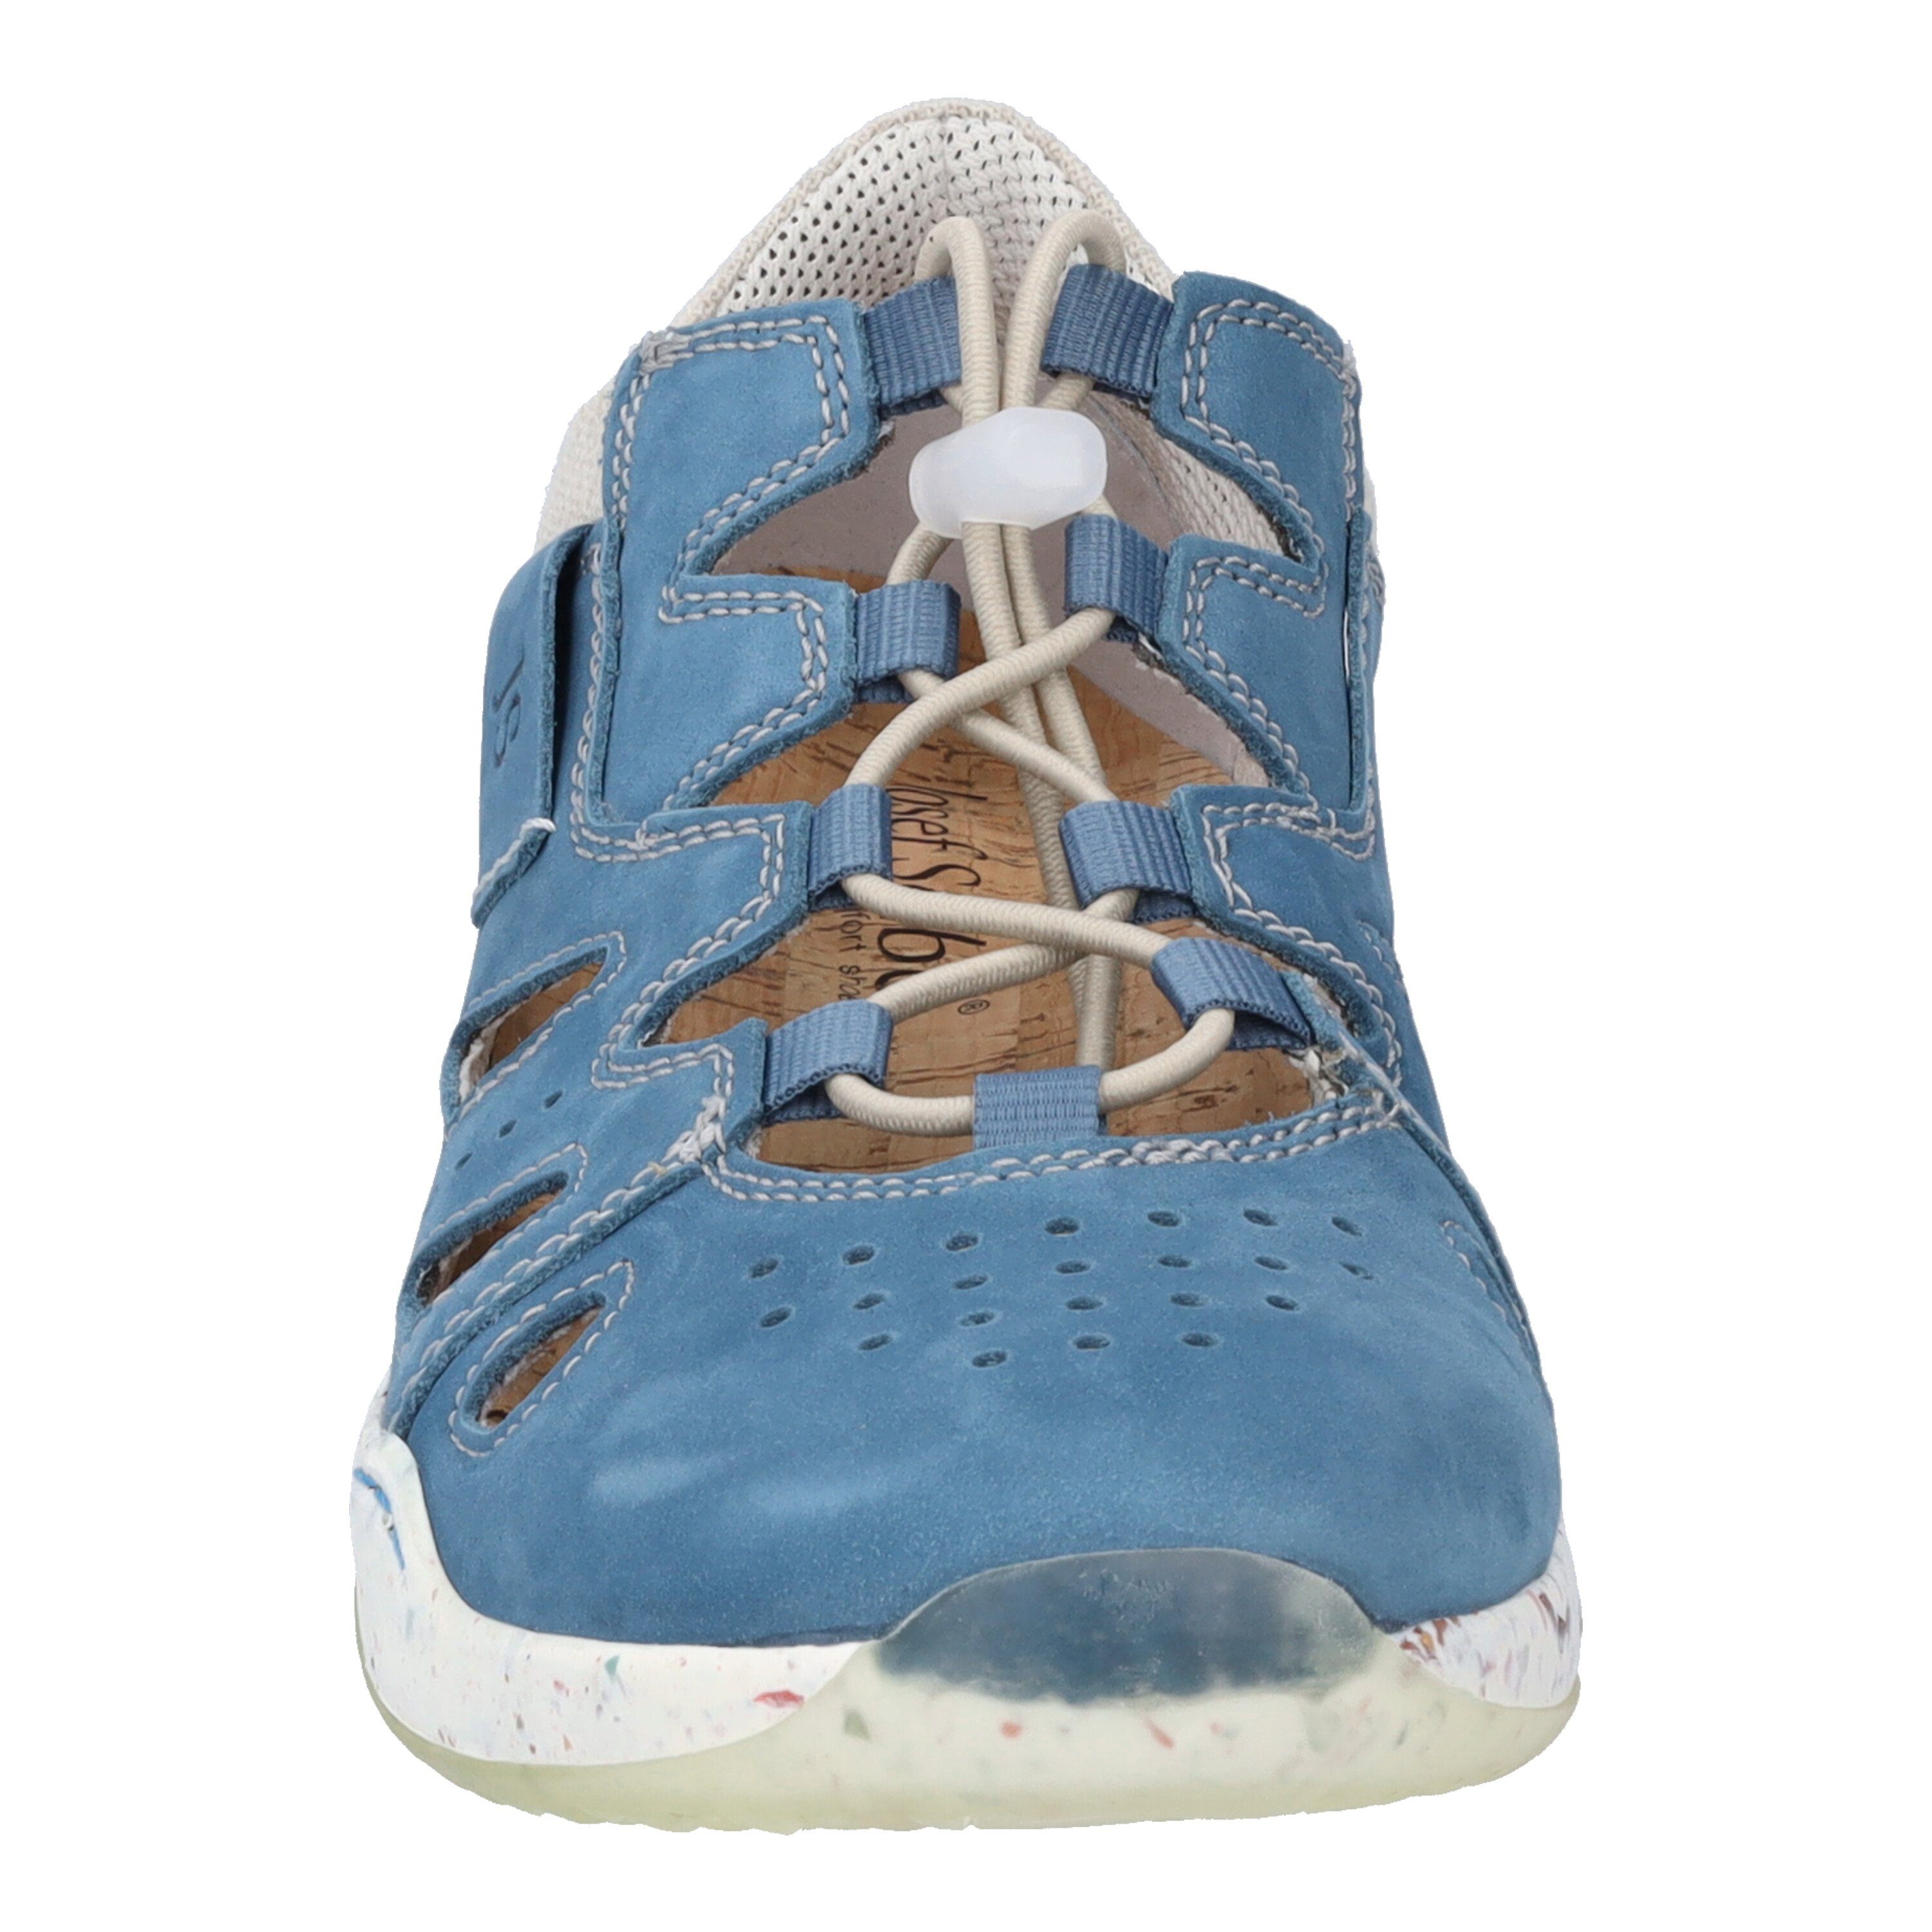 Josef Seibel Ricky 17, (10201667) blau blau-kombi Sneaker